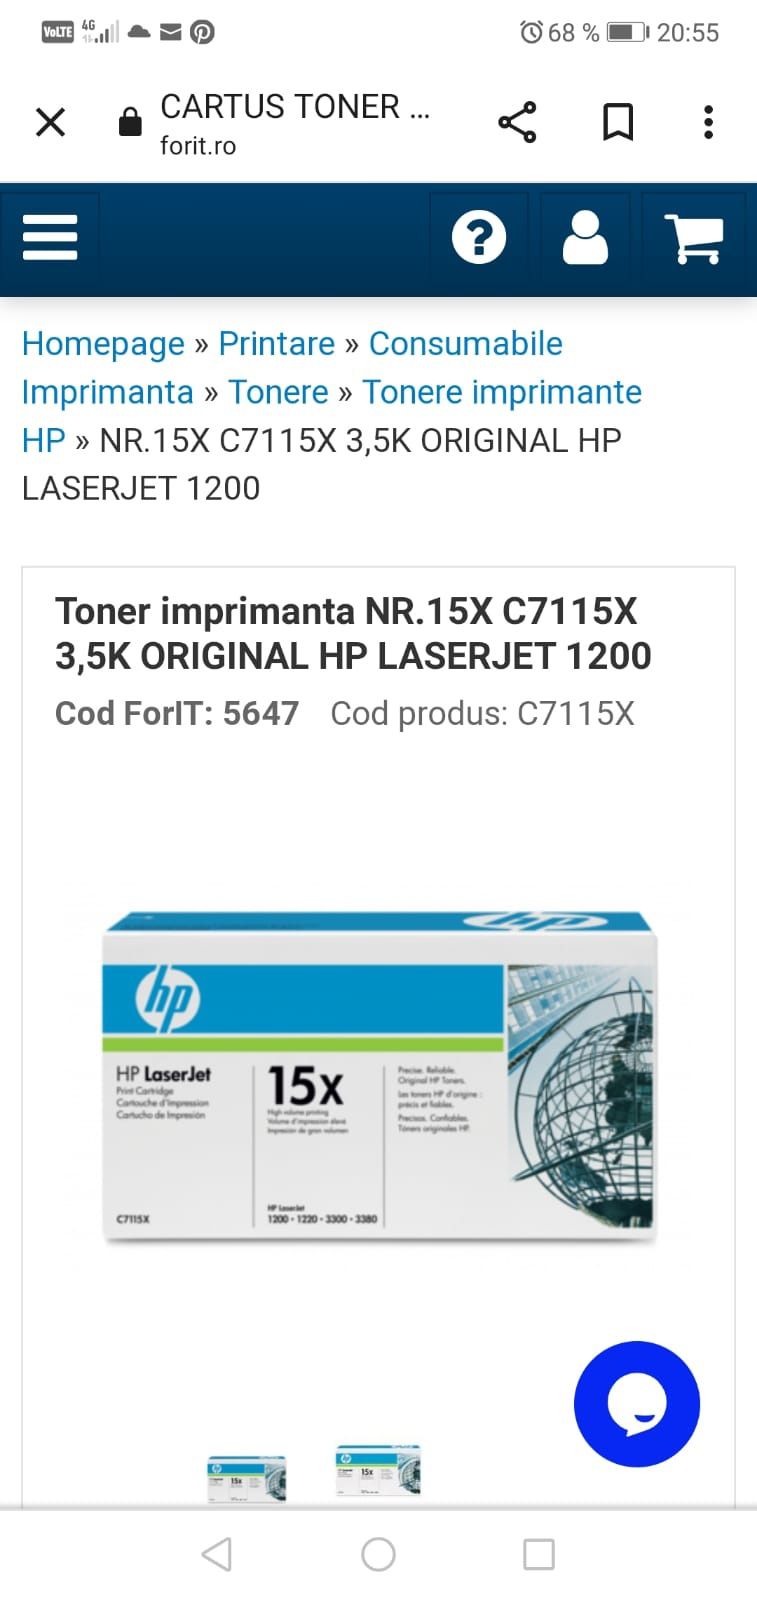 Toner imprimanta HP